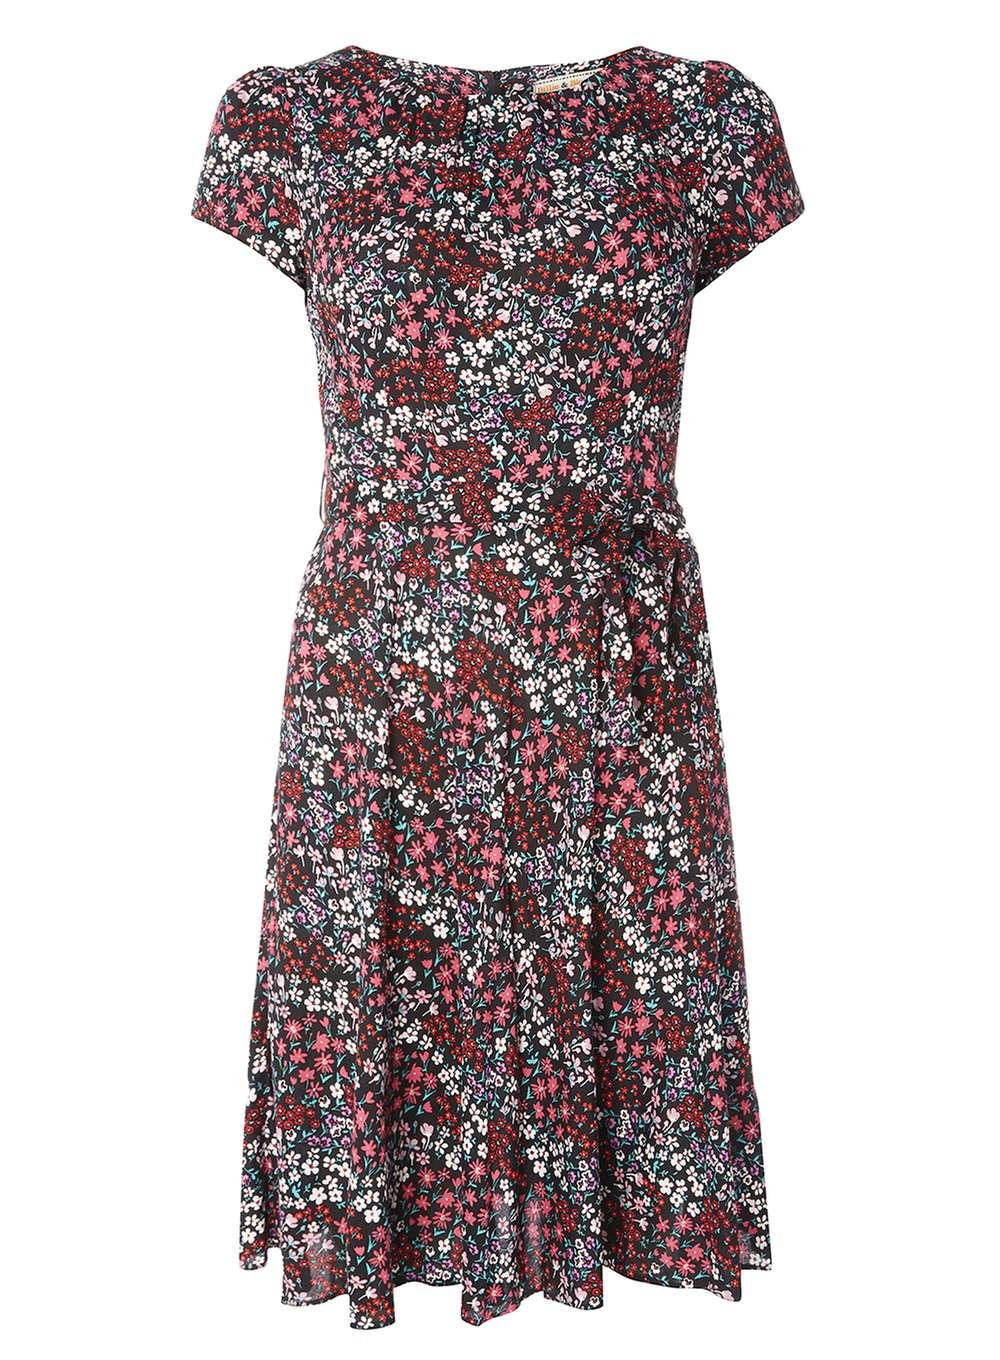 Dorothy perkins Billie & Blossom Multi Colour Floral Ditsy Dress | Lyst